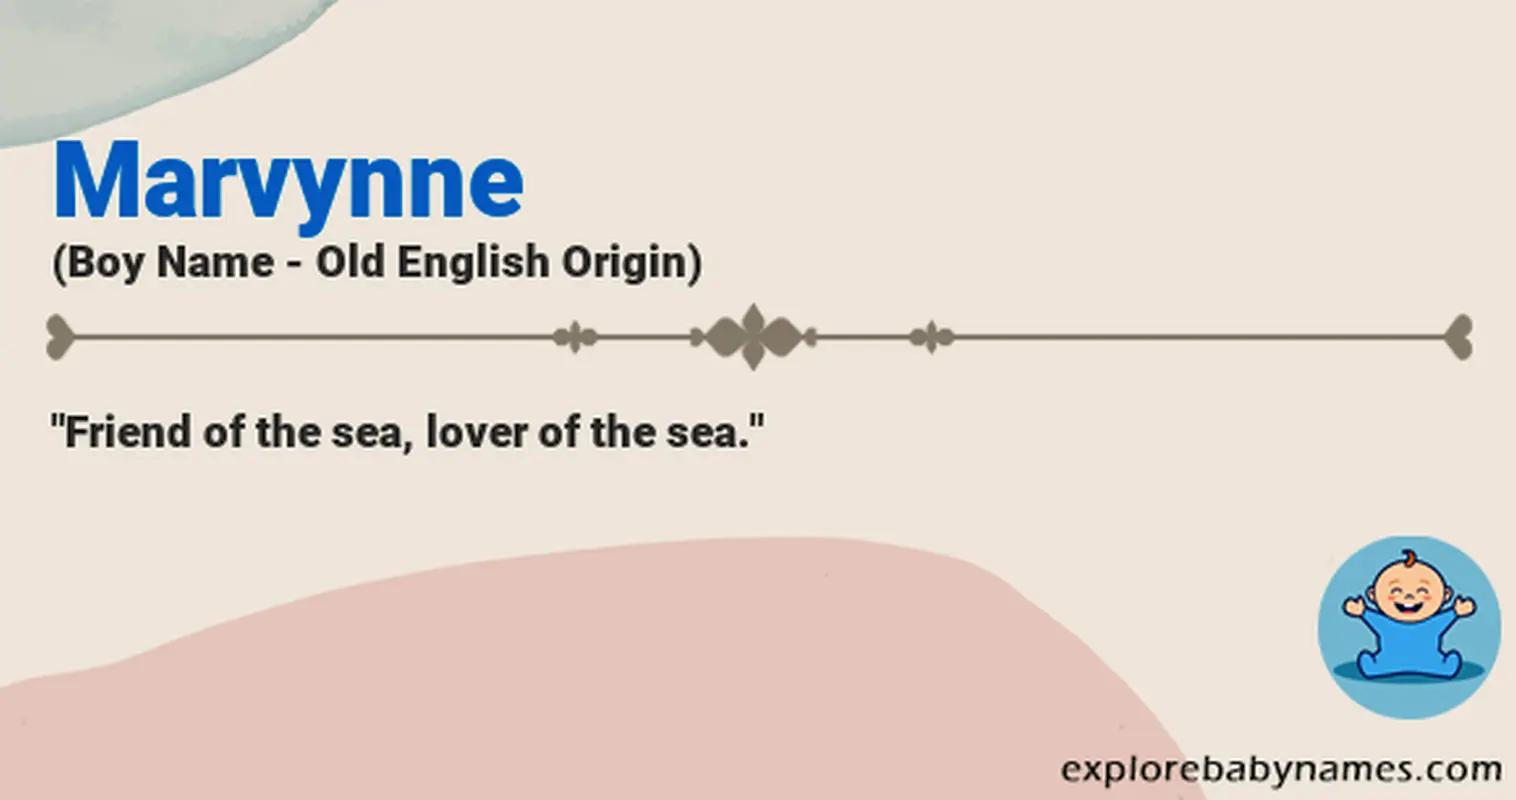 Meaning of Marvynne